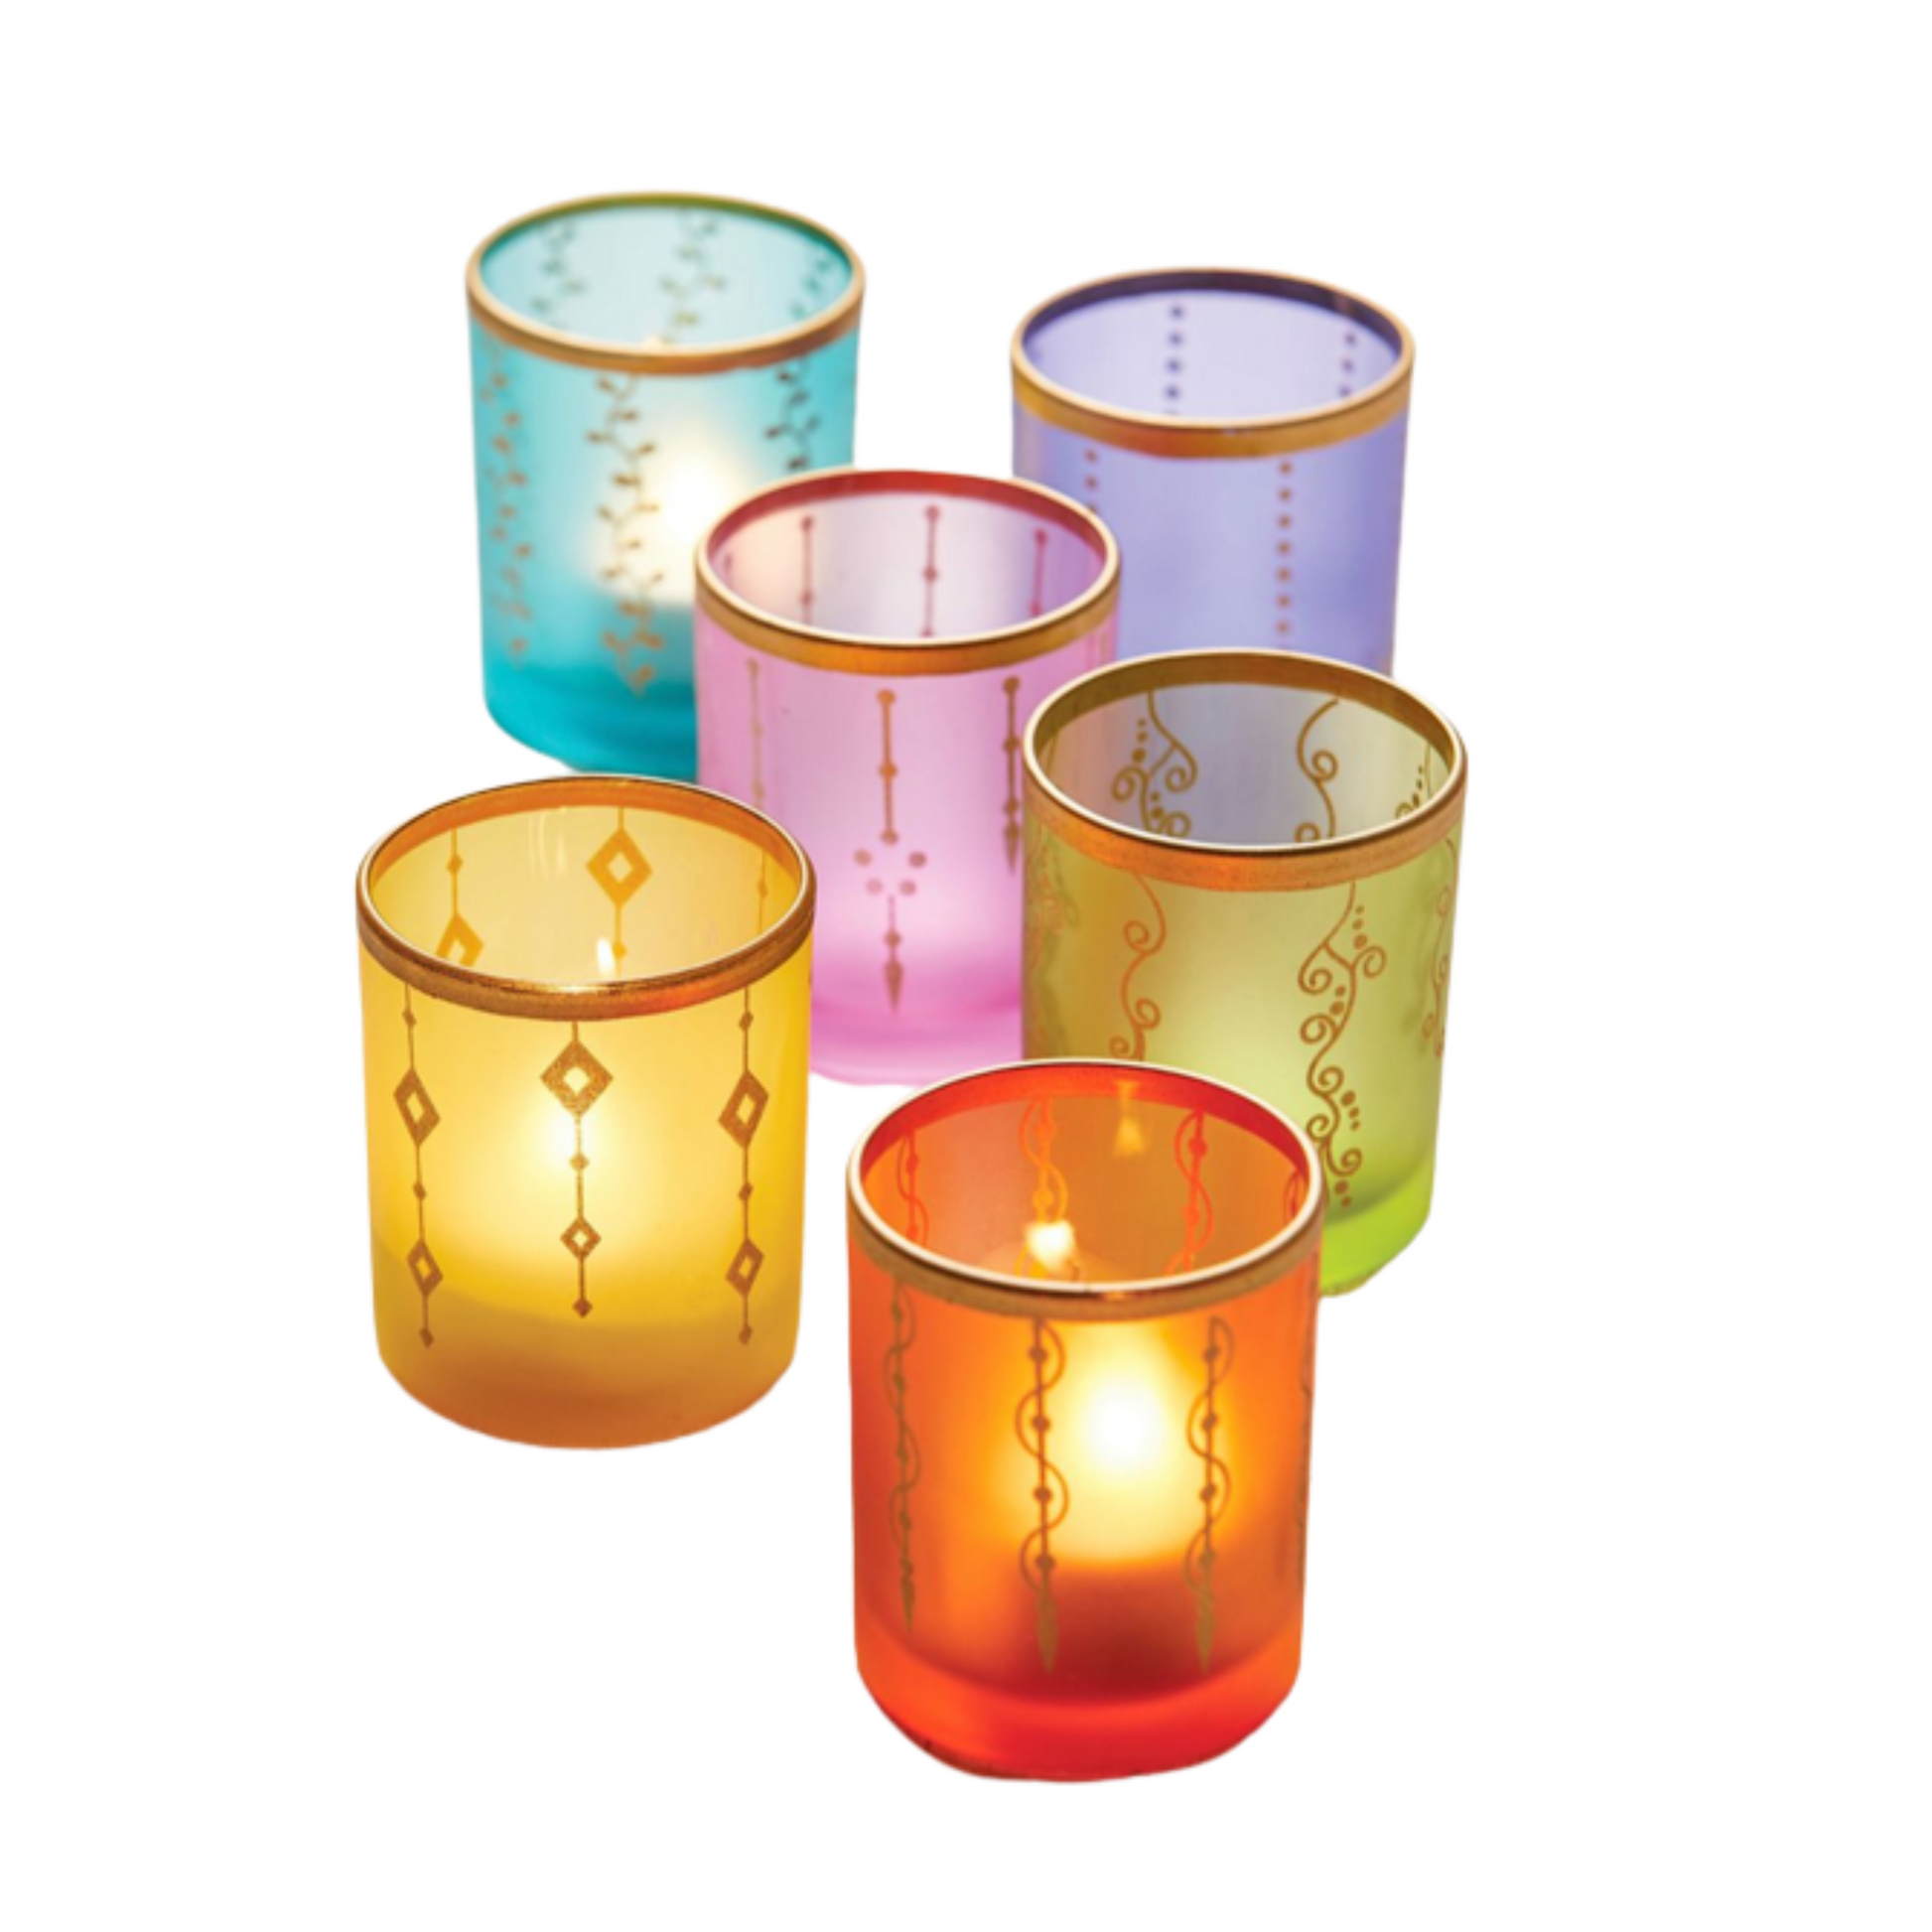 Diwali candle holders